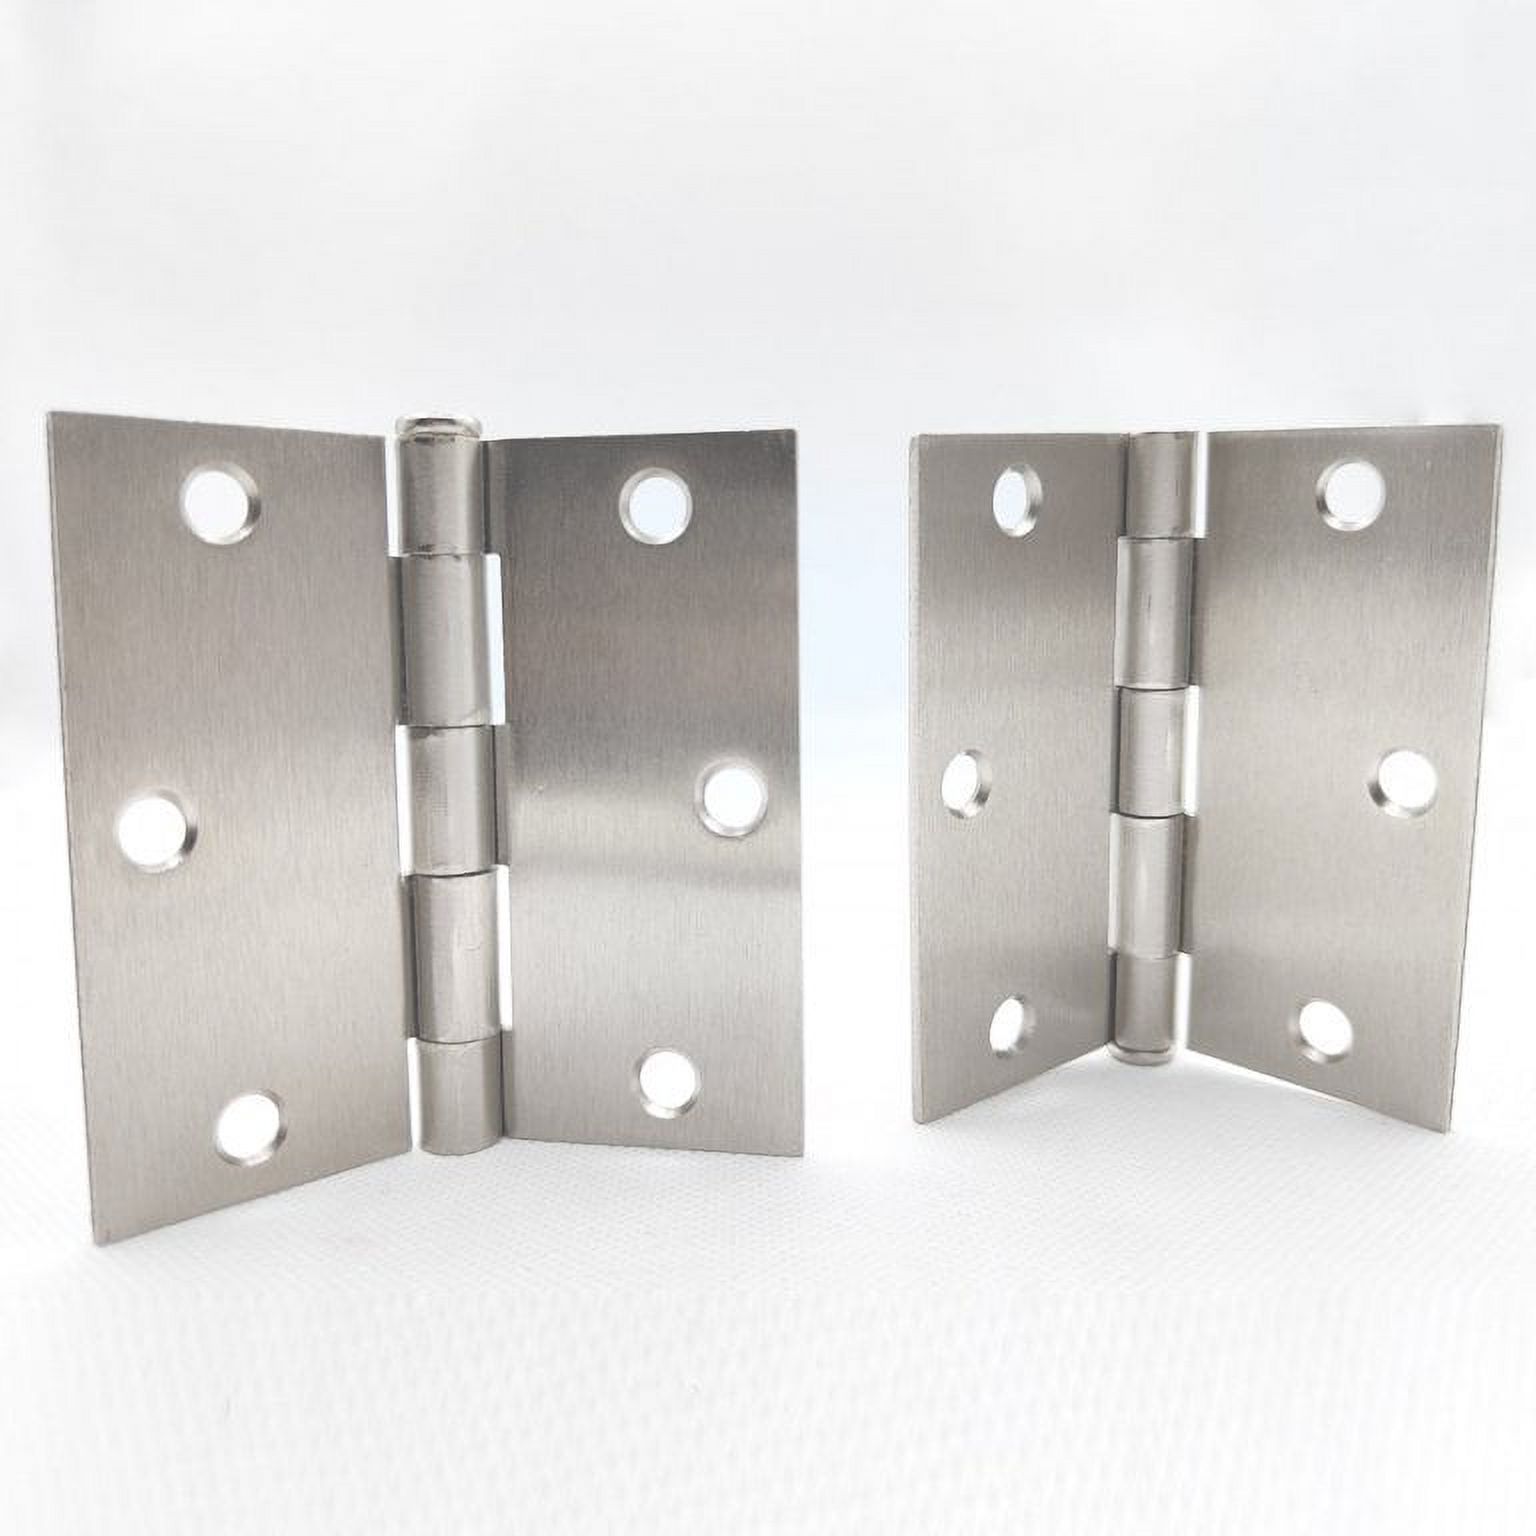 100 PACKS 3.5IN Steel Door Hinge Heavy Duty for Interior & Exterior Door, Square Corner,Thickness:2.2mm,Satin Nickel,Removable pin, with Screws - image 3 of 5